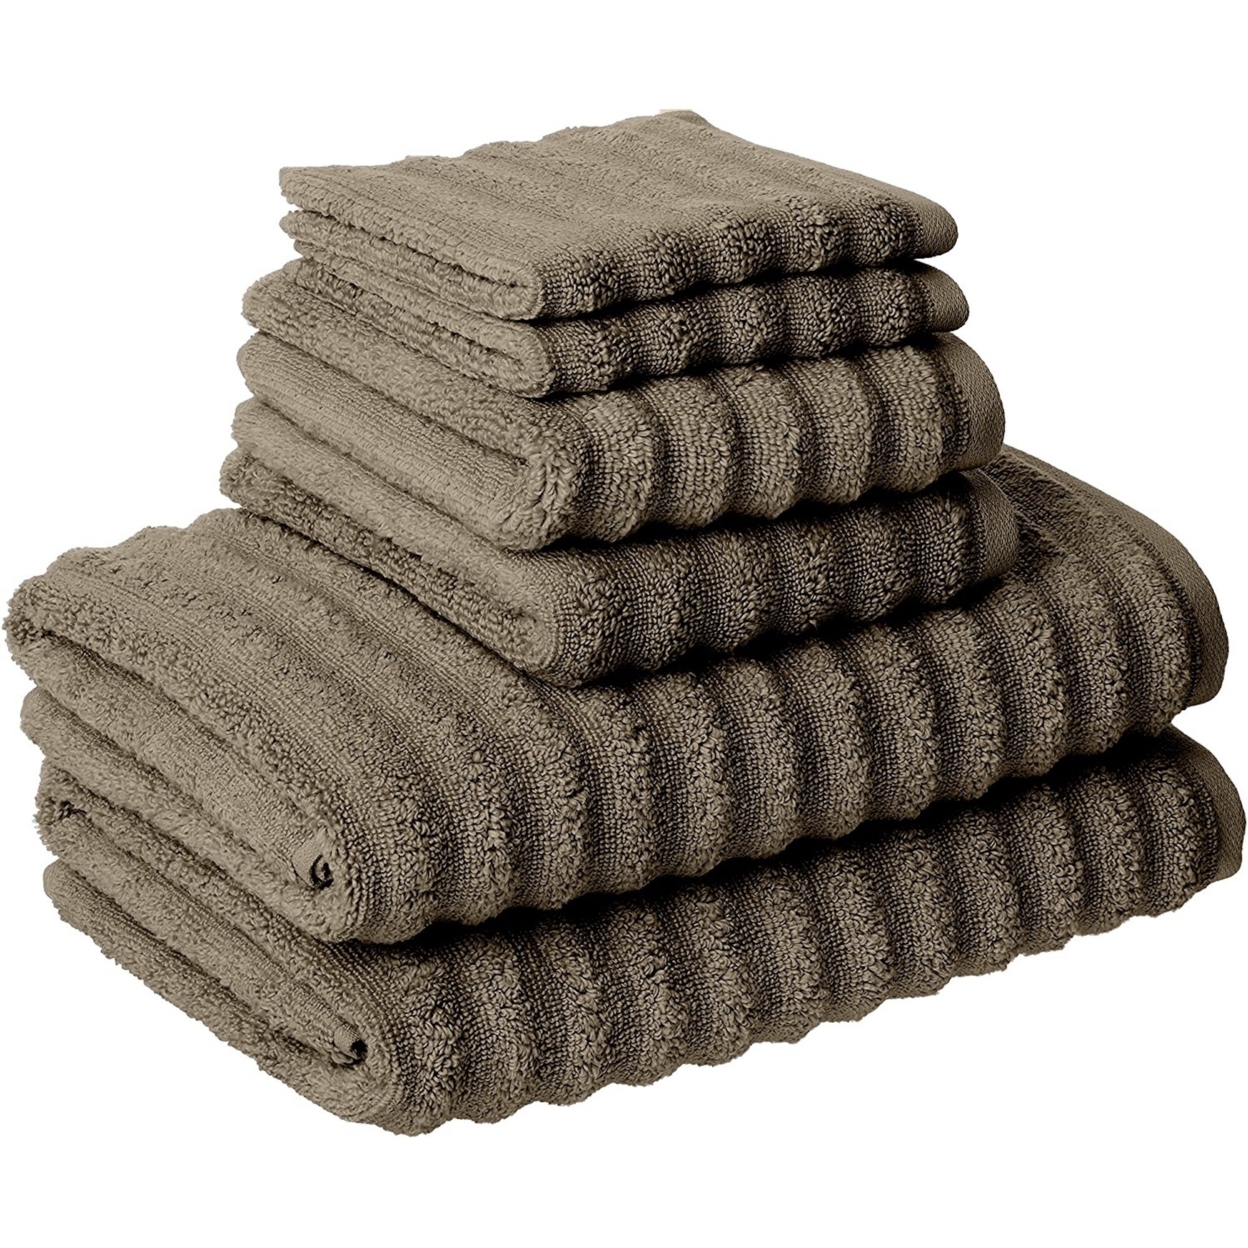 Cora 6 Piece Soft Egyptian Cotton Towel Set, Classic Textured Design, Brown- Saltoro Sherpi